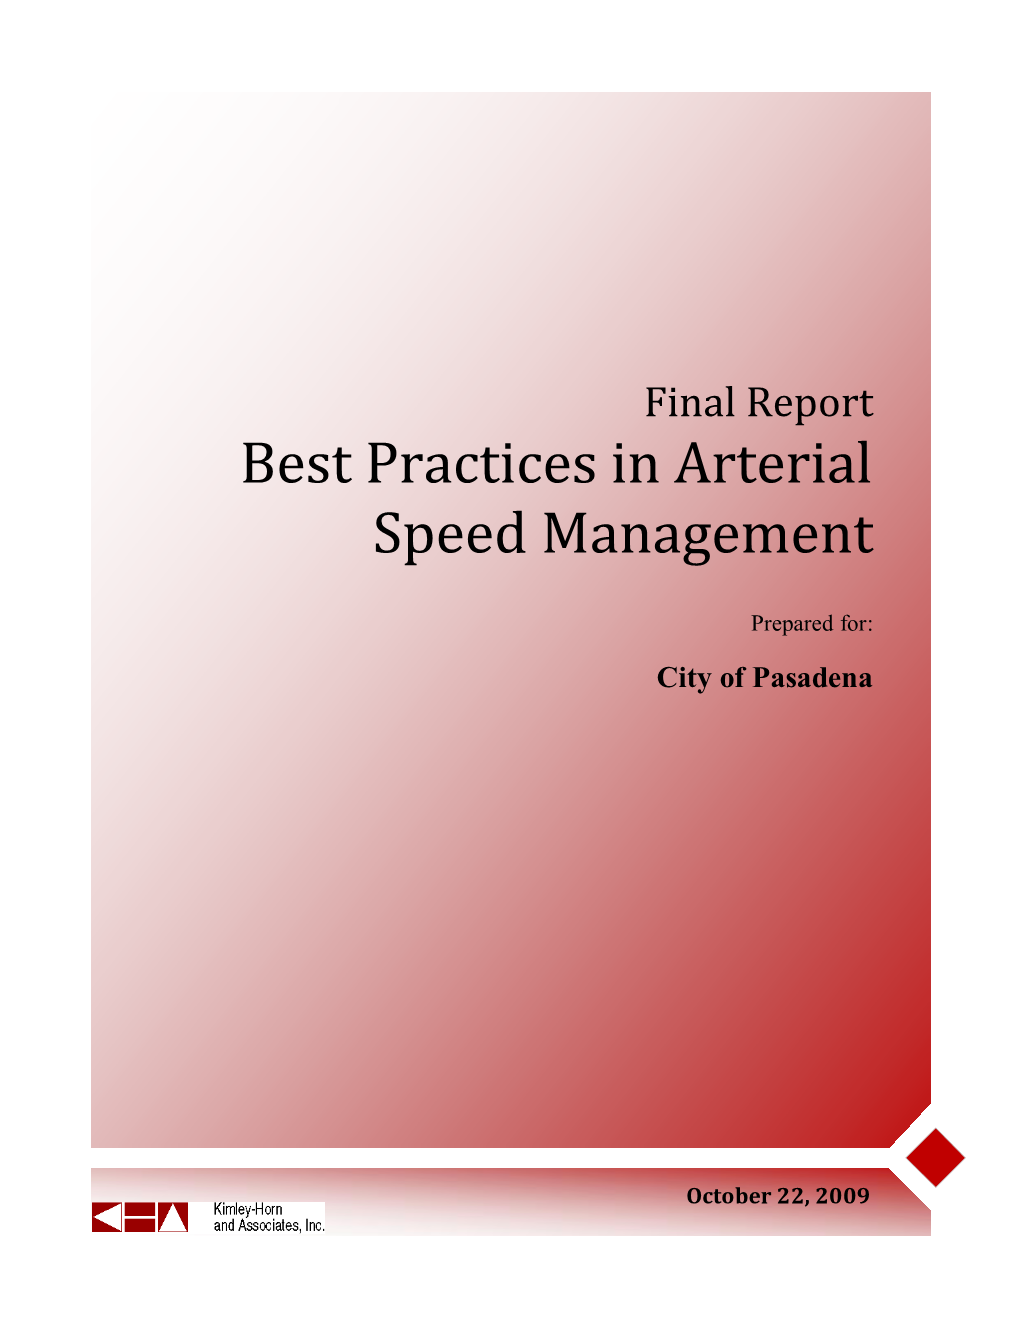 Best Practices in Arterial Speed Management